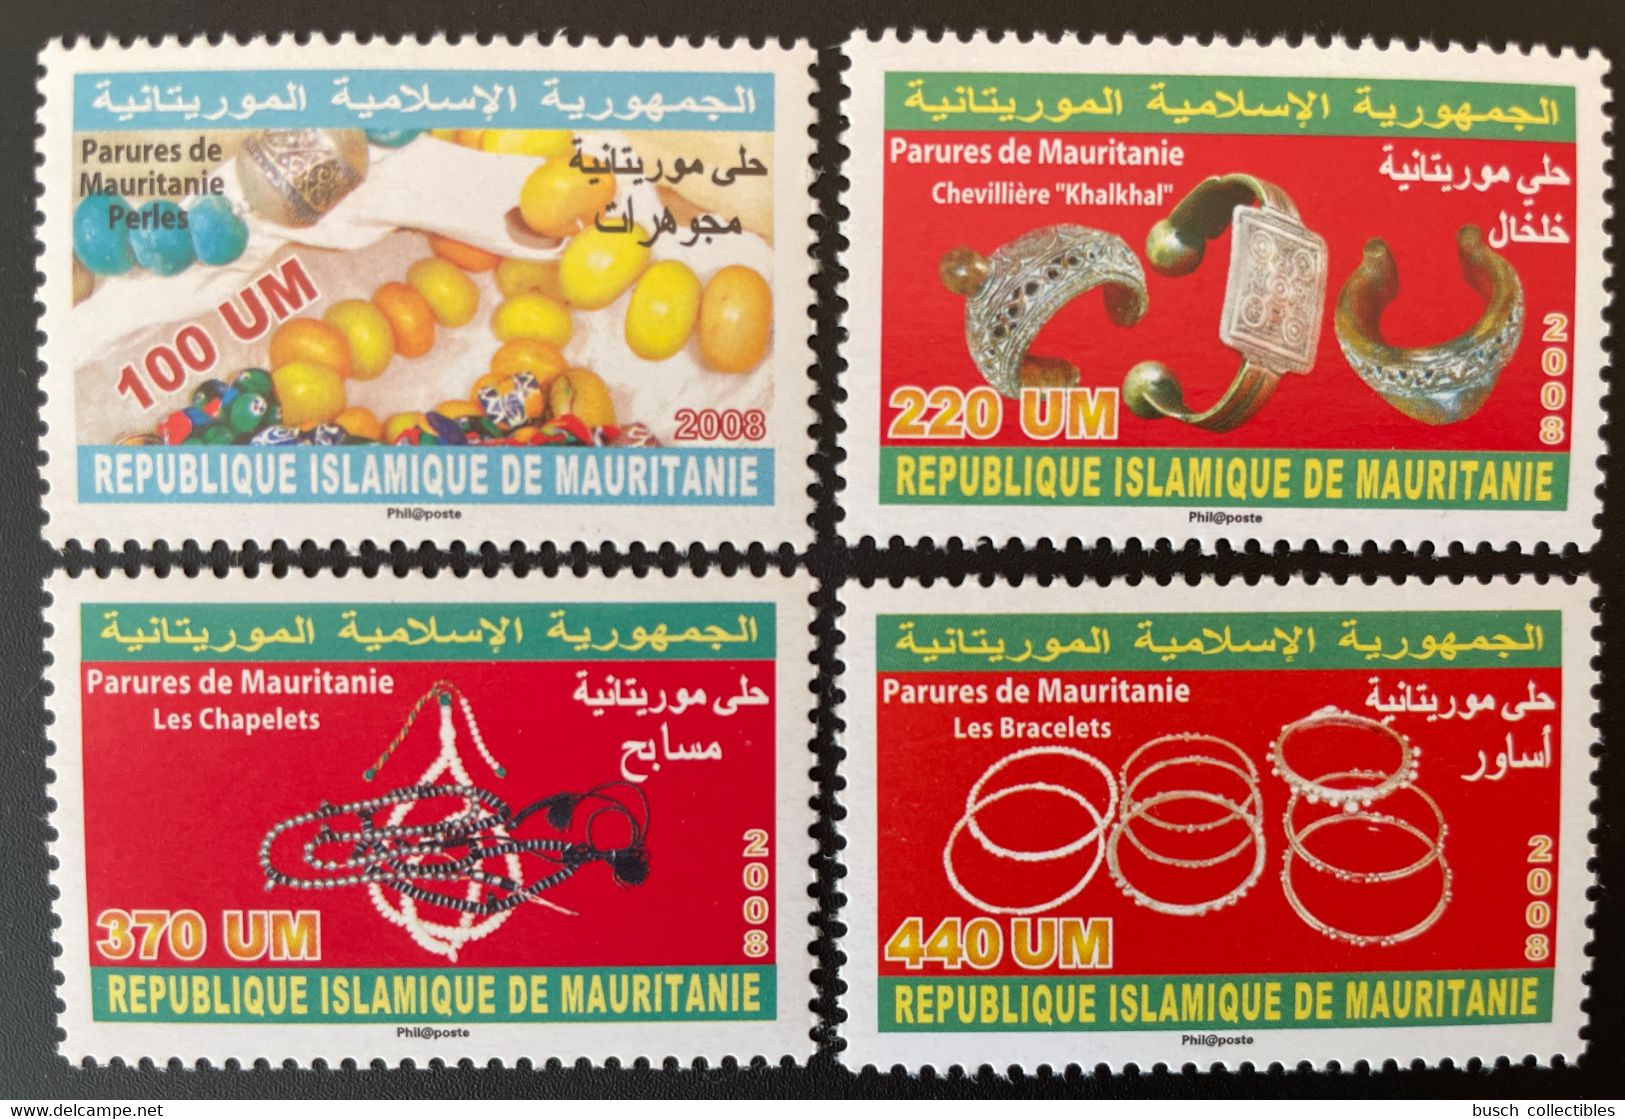 Mauritanie Mauretanien Mauritania 2008 Mi. 1157 - 1160 Parures Perles Bracelets Chapelets Bijoux Schmuck Jewels MNH ** - Mauritanië (1960-...)